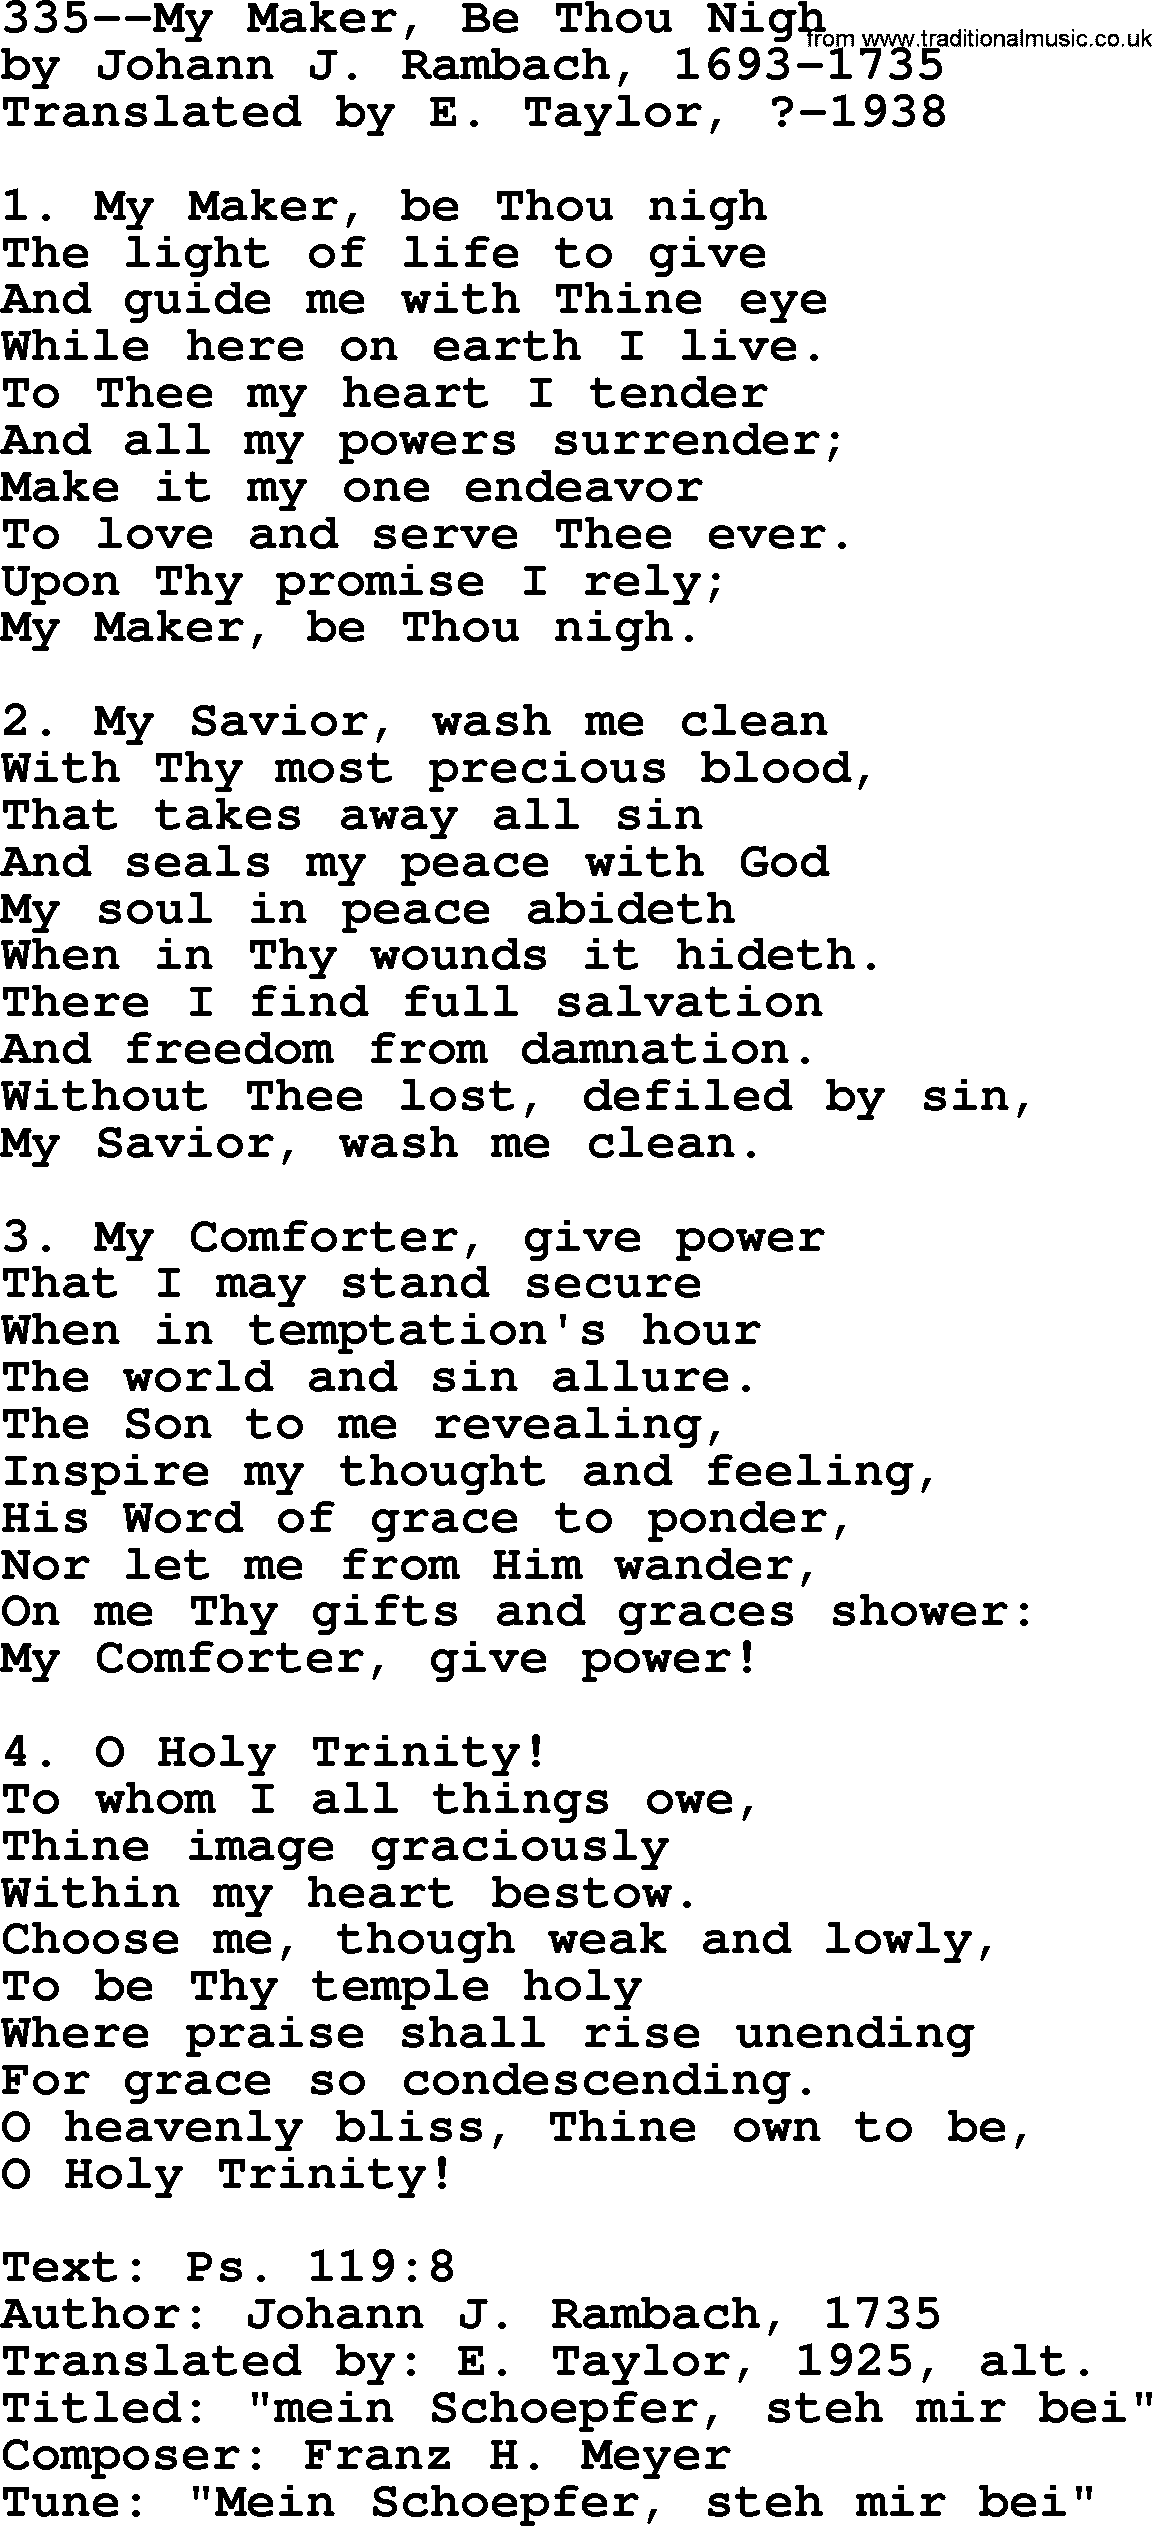 Lutheran Hymn: 335--My Maker, Be Thou Nigh.txt lyrics with PDF